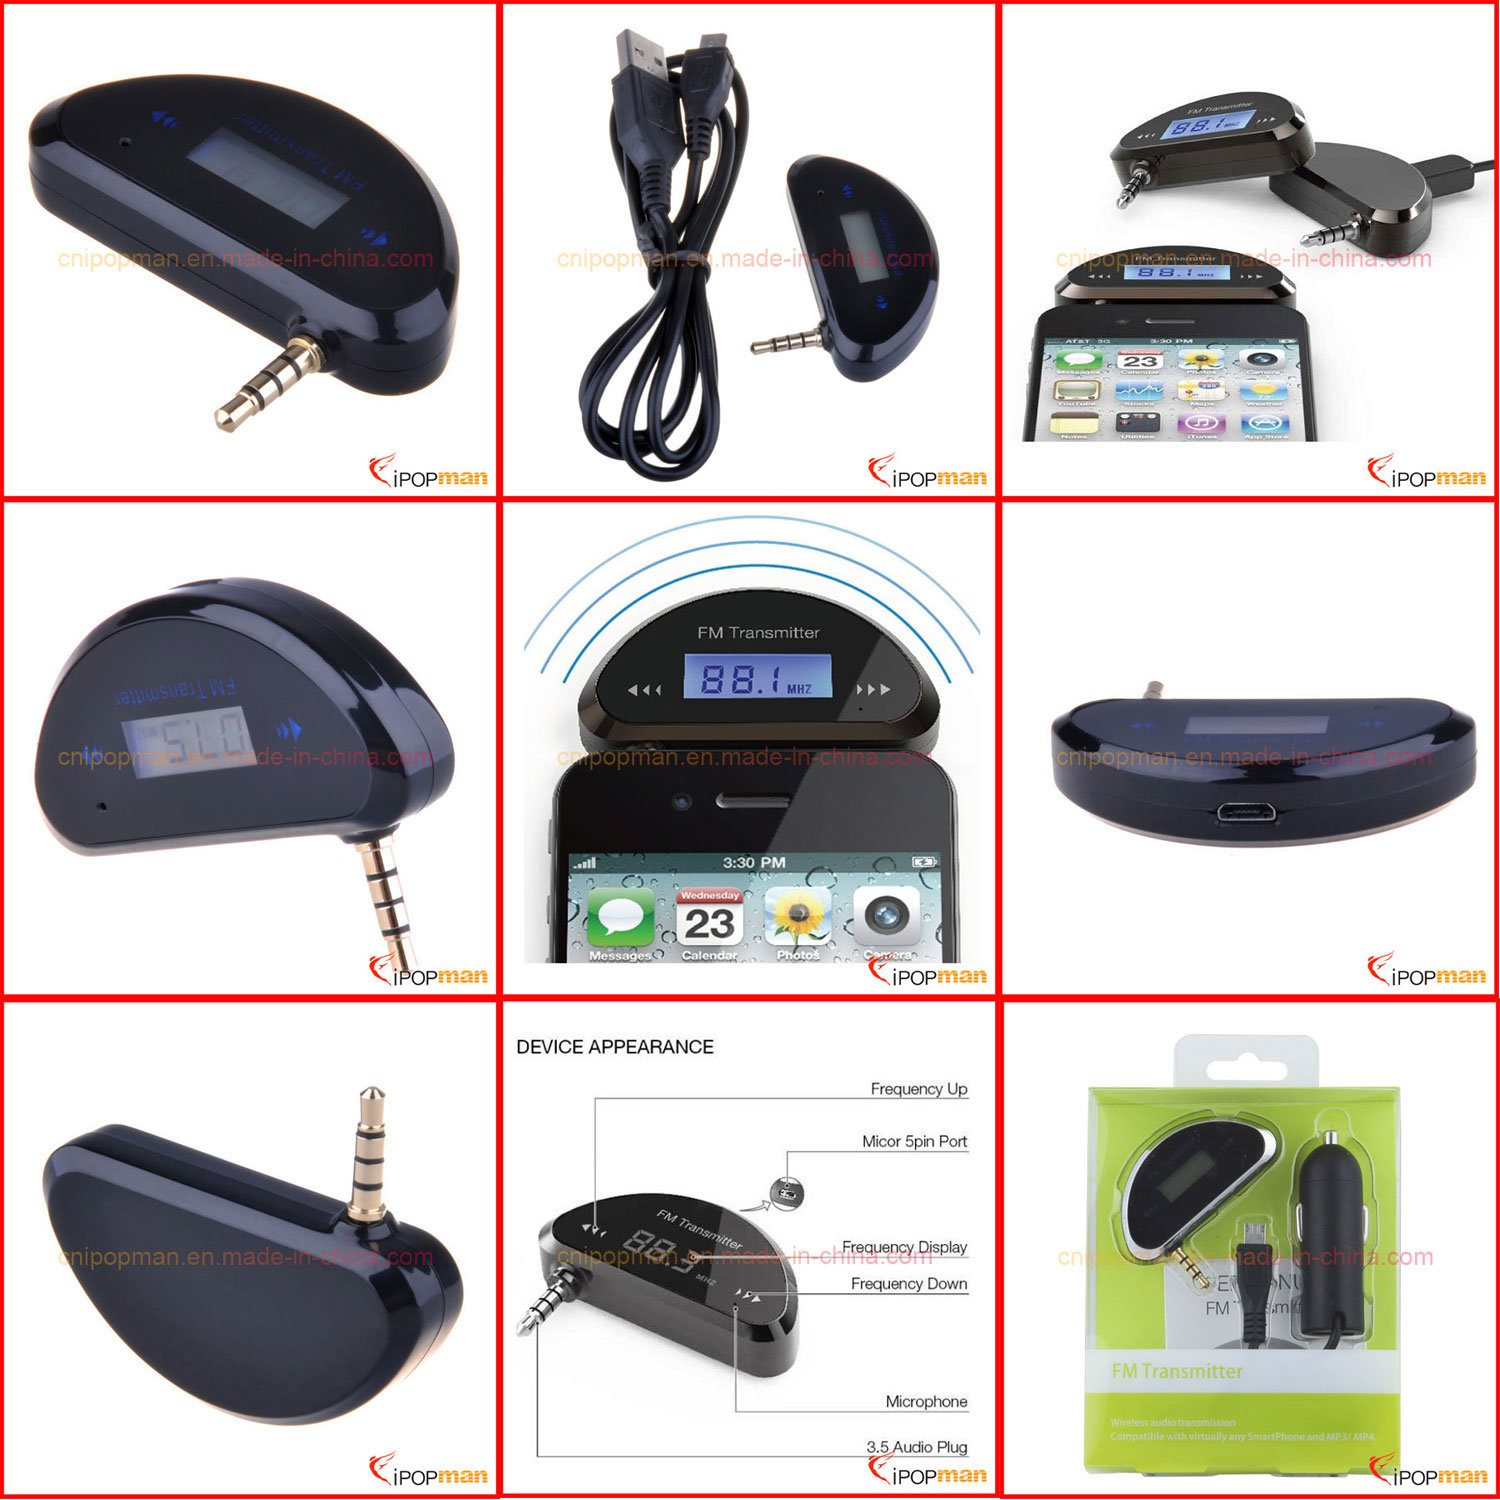 Car MP3 Player with USB Port, Car Audio, Mini Car MP3 Player (I-FMT 604)